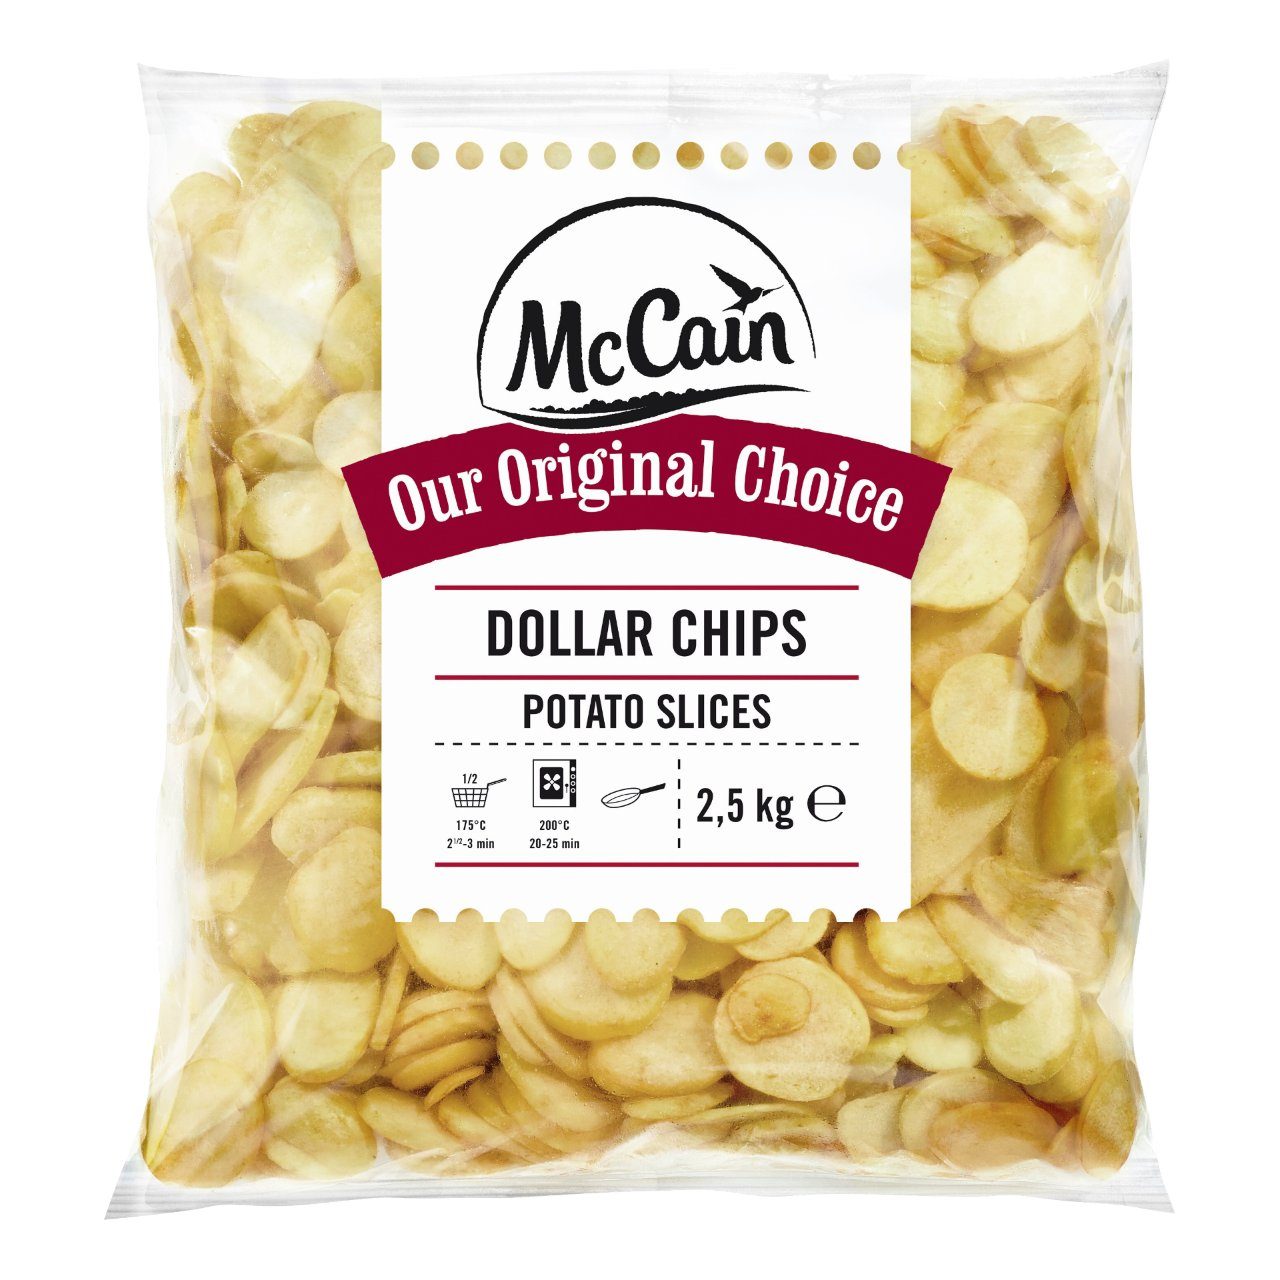 Dollar chips